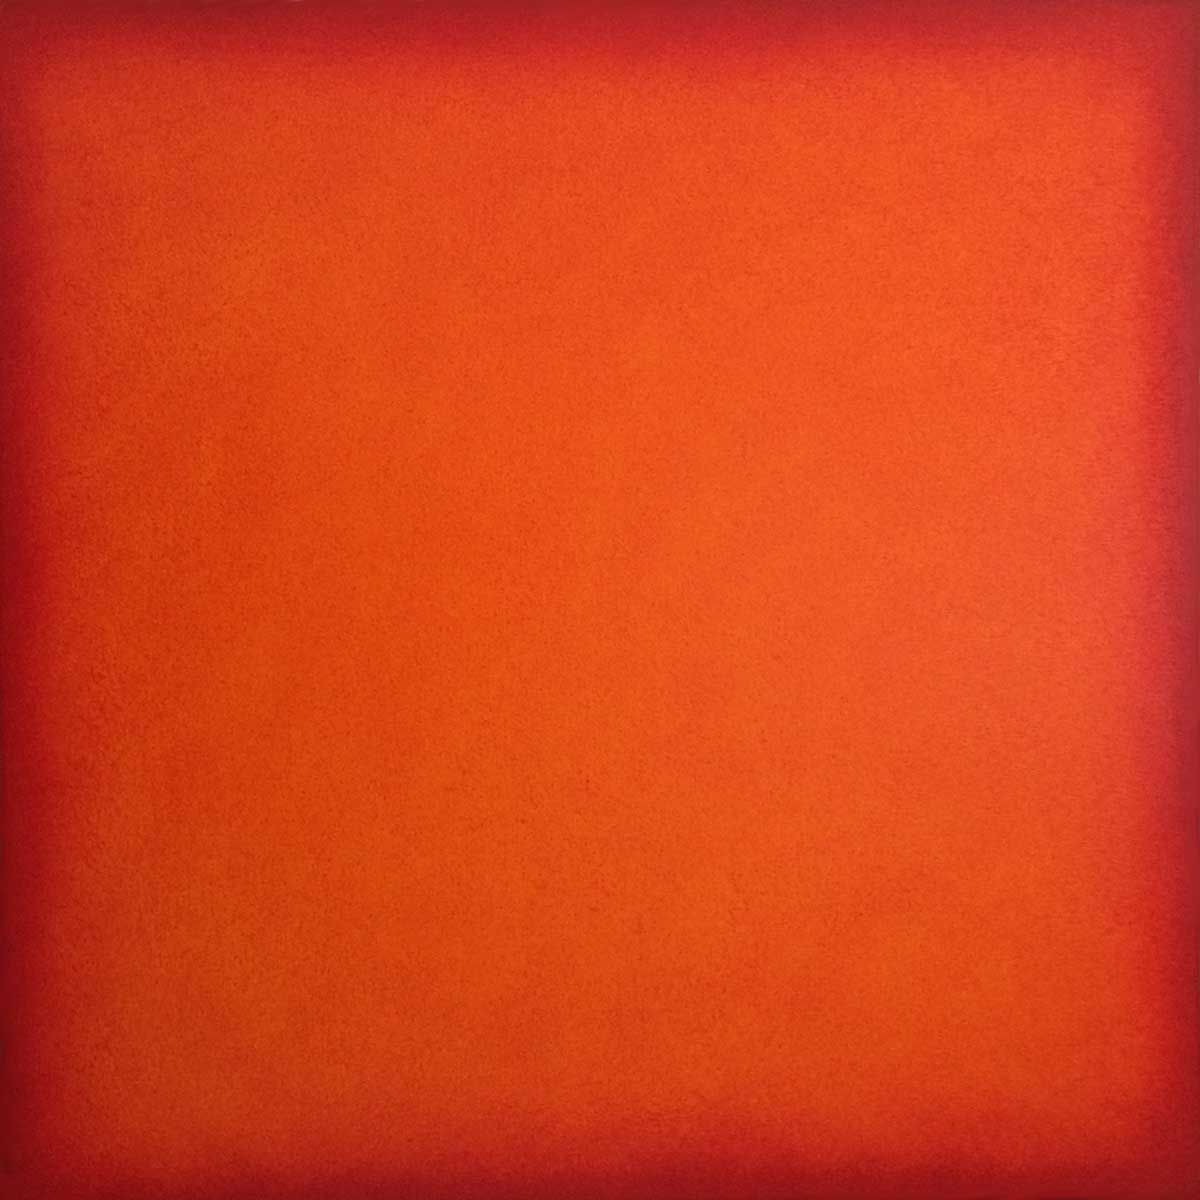 stanko deep orange | 80x80 | Öl auf Leinwand